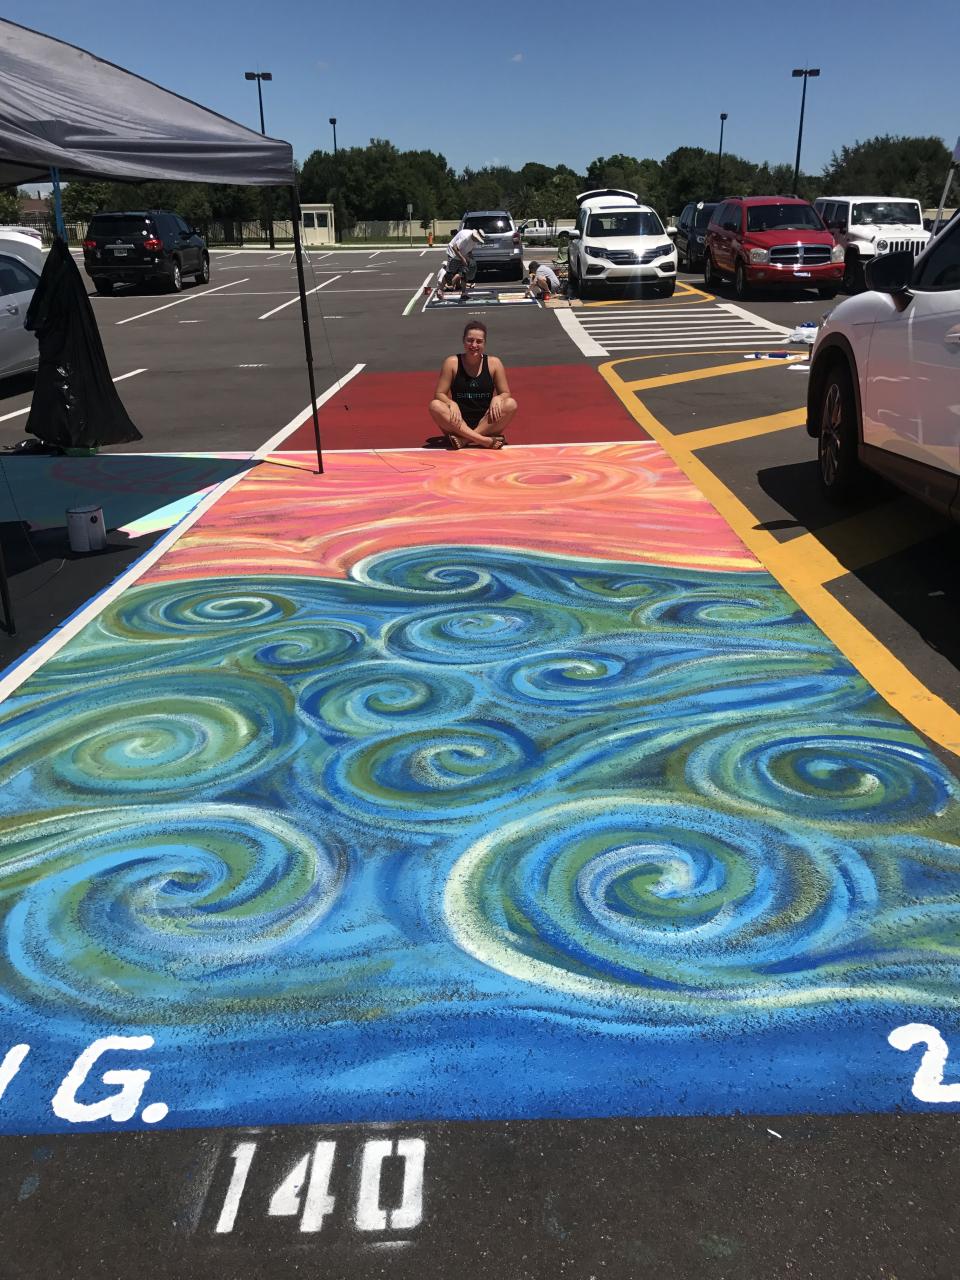 Senior Parking Spot Painting | Parking spot painting, Parking lot painting, Parking spot